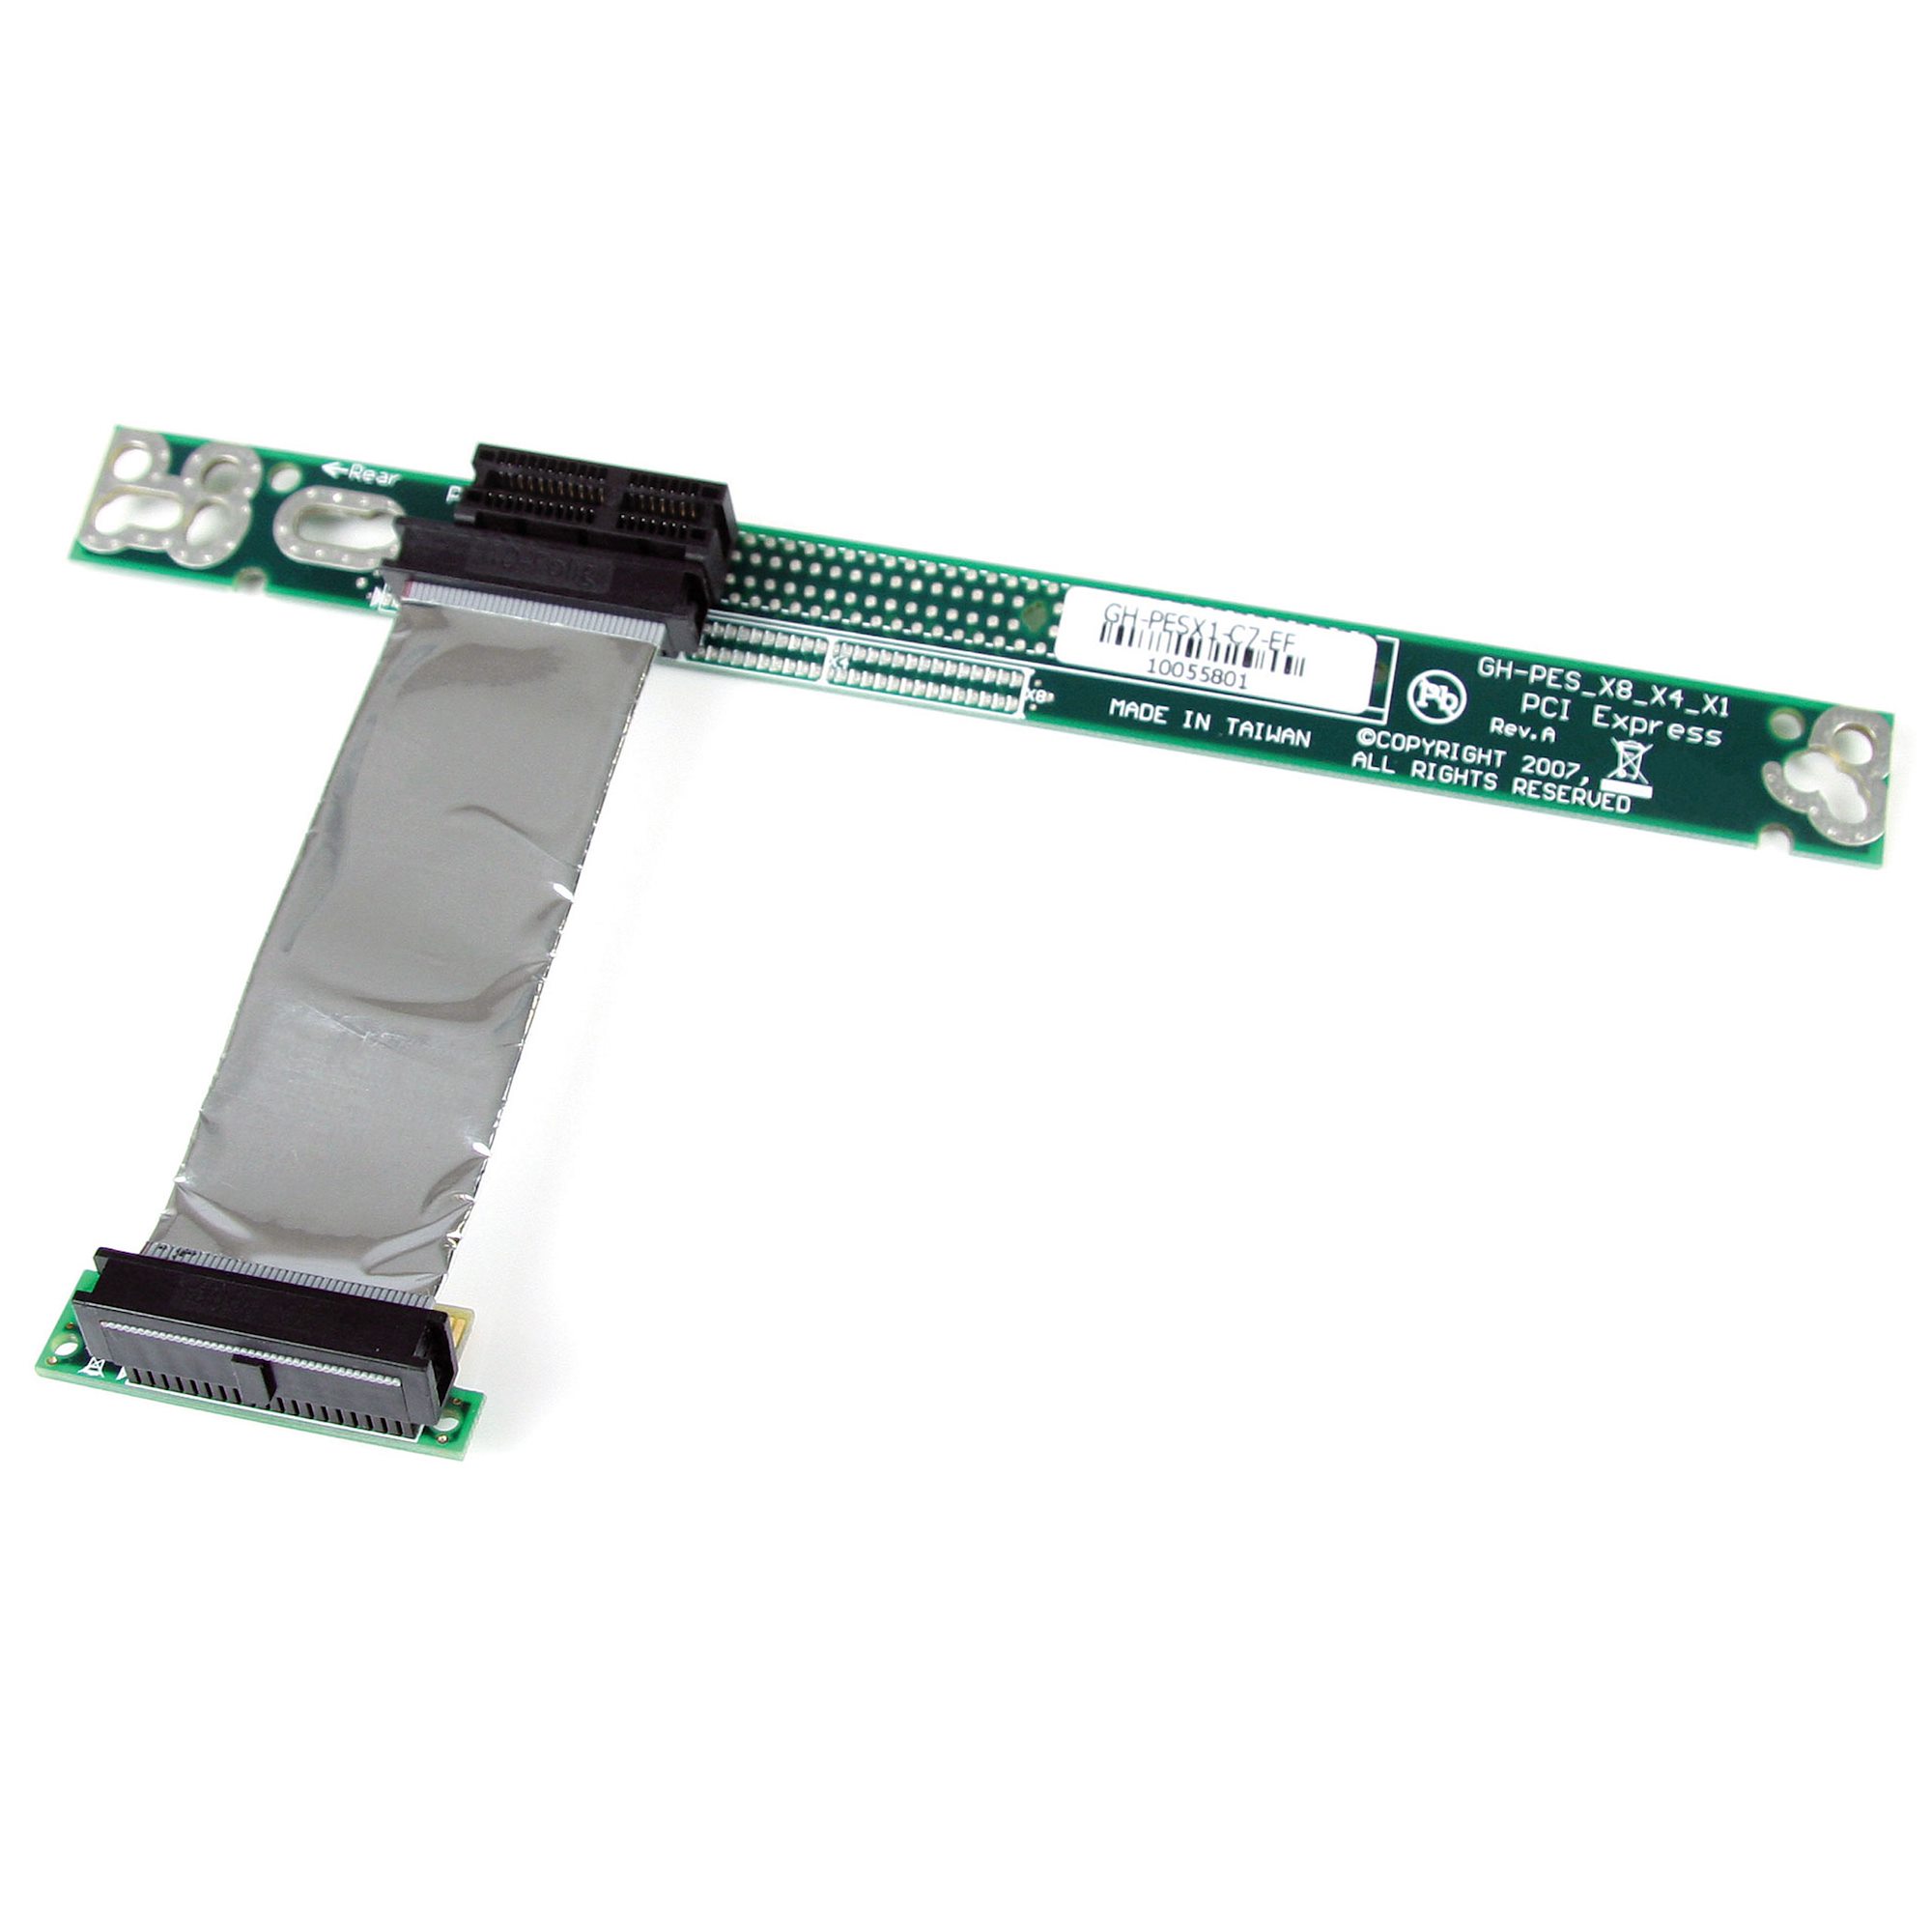 Pci pci e x1 адаптер. PCI Express Riser 1u. Слот PCI адаптер Riser Card. Адаптер PCI to PCI Express x1. Райзер PCI Express x16 для ноутбука.